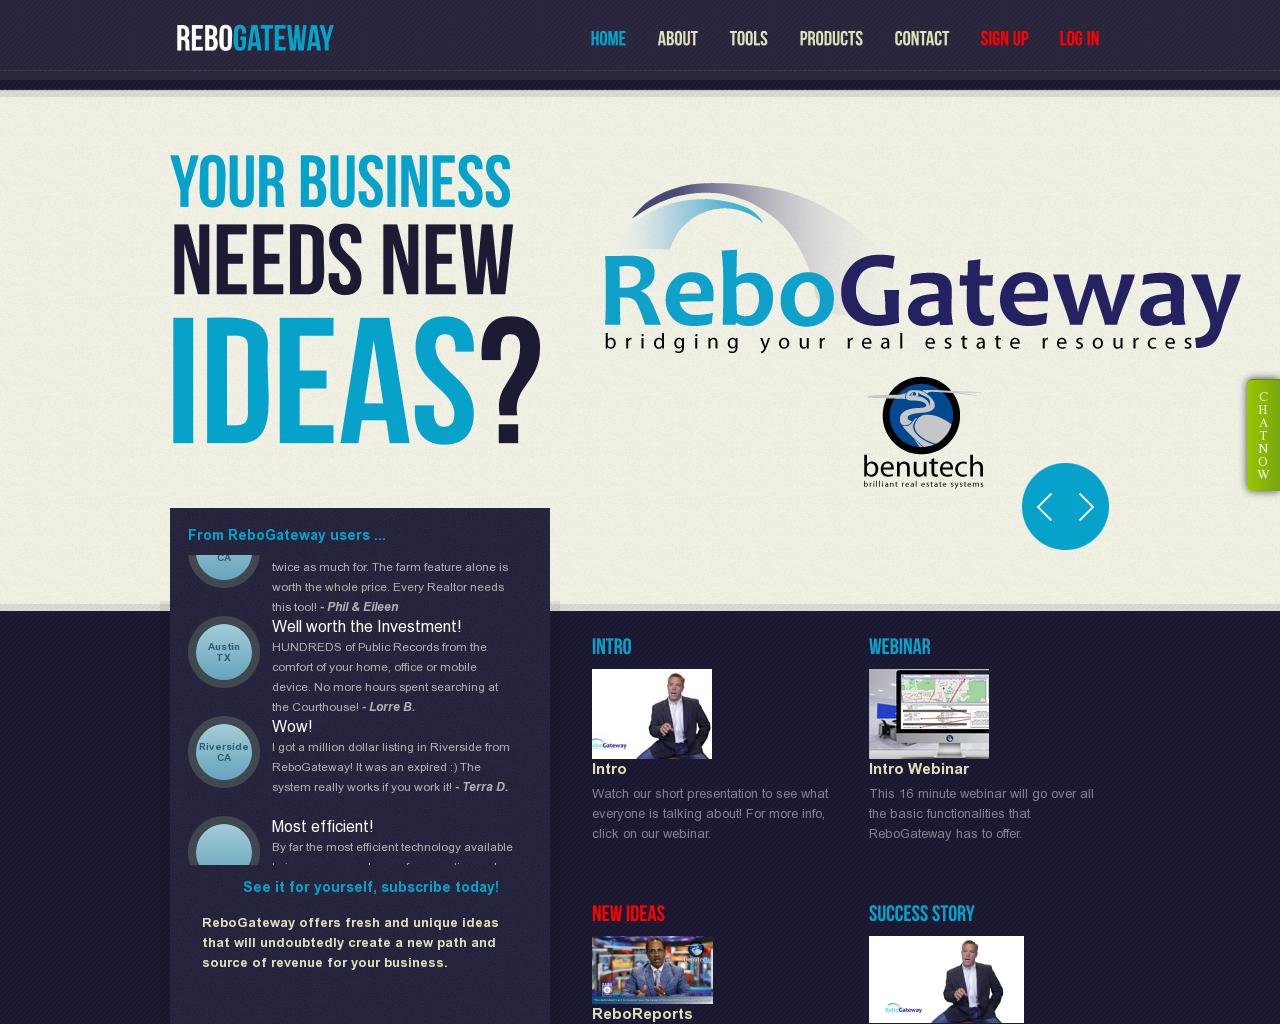 rebogateway.com